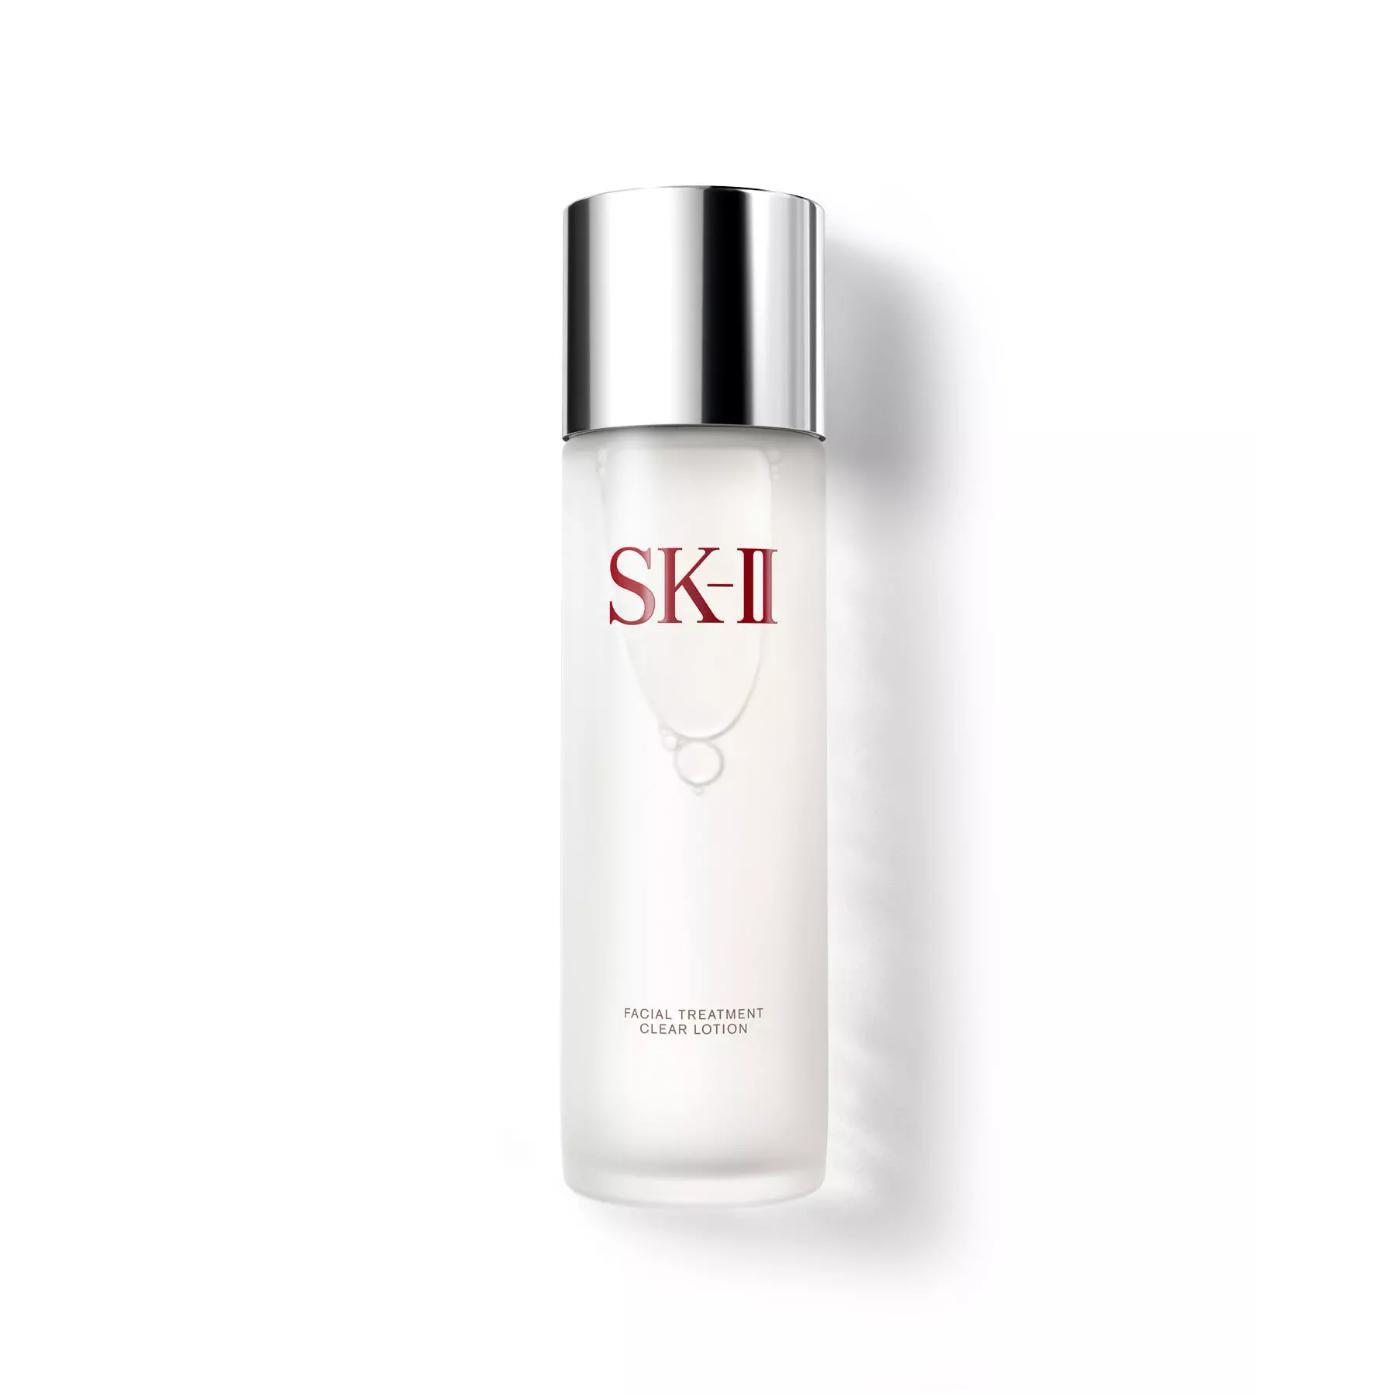 SK-II Facial Treatment Clear Lotion 230ml – Japanese Taste